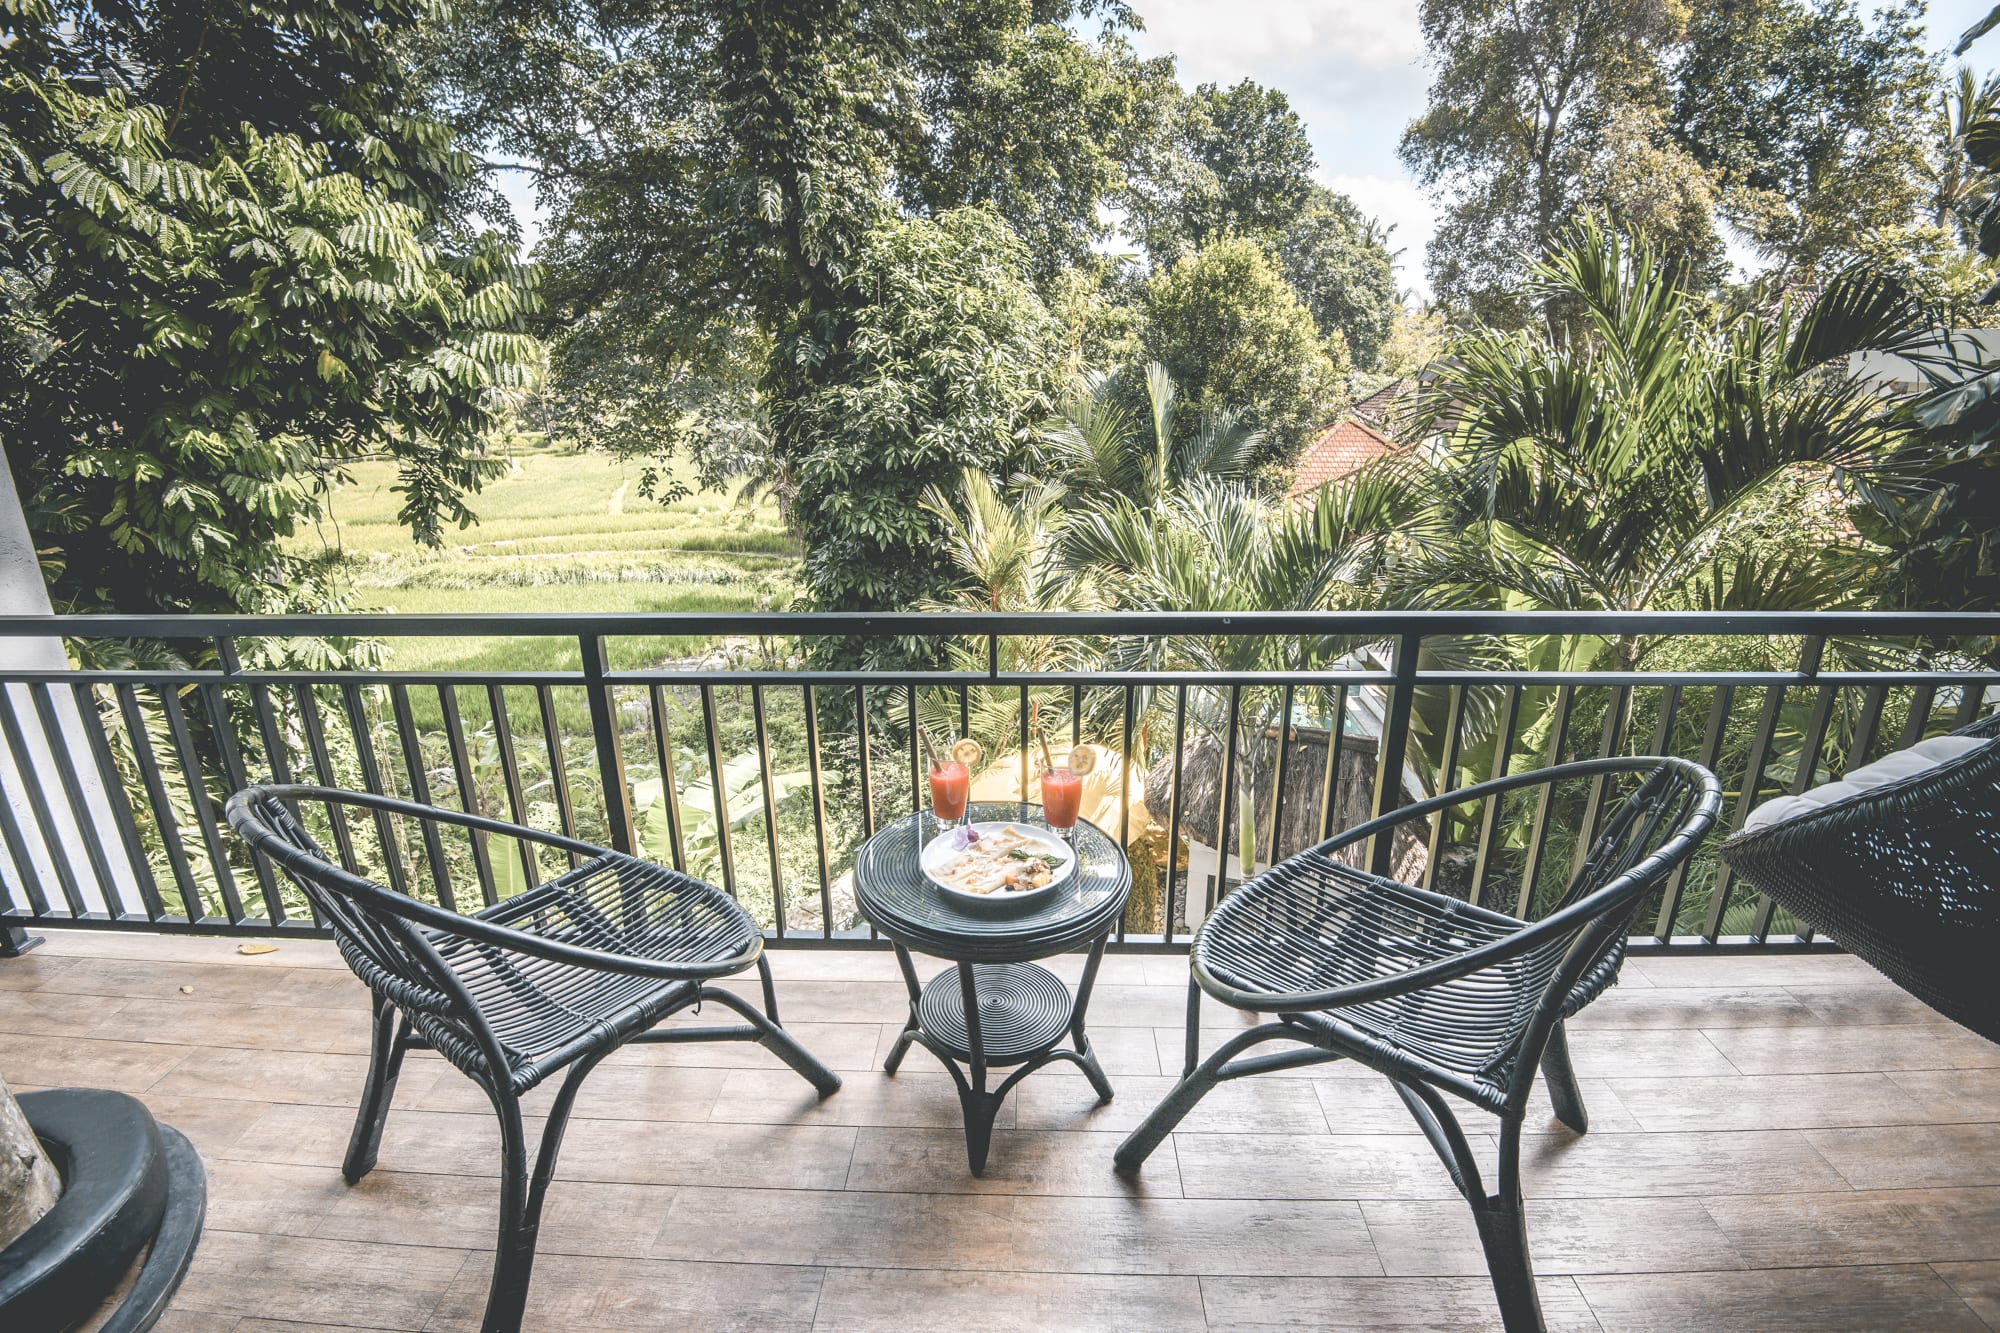 boomhut op Bali, Airbnb finds: slapen in een boomhut op Bali